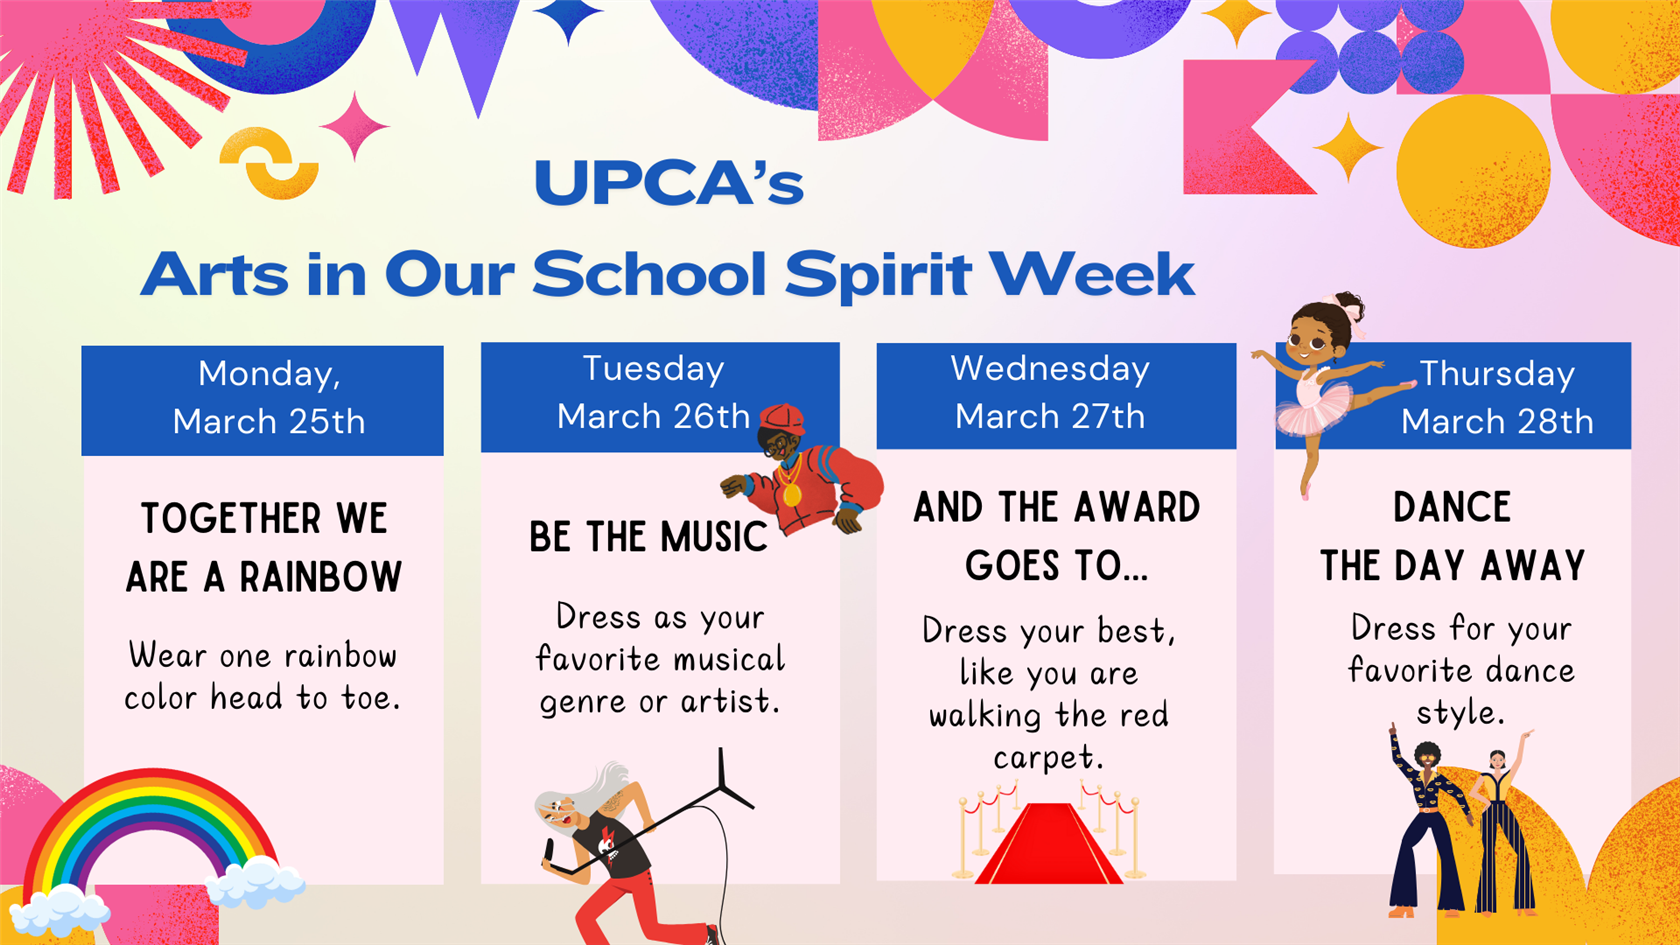  UPCA's Arts in Our School Spirit Week